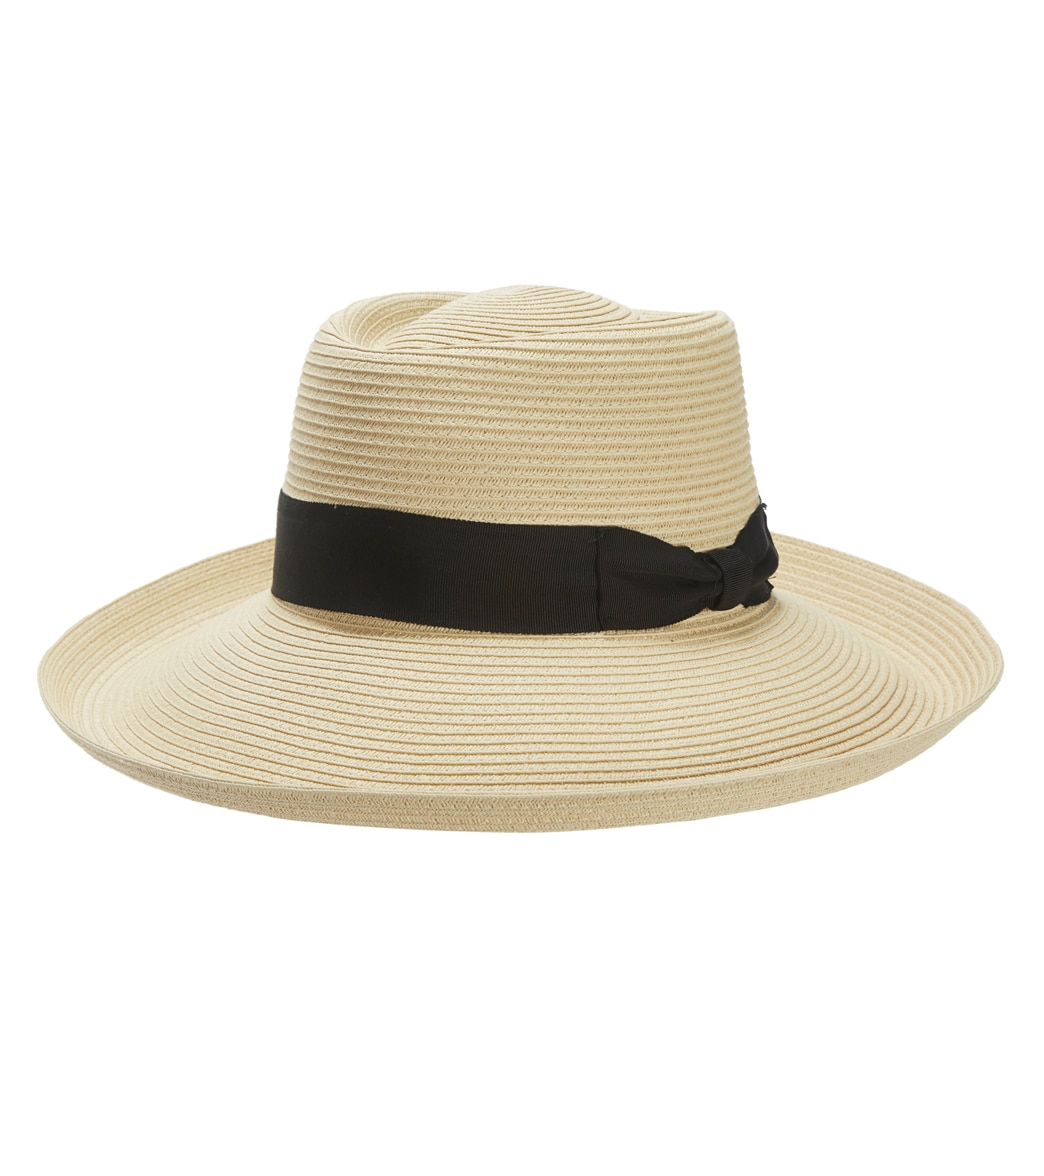 Physician Endorsed Women's Santa Cruz Straw Hat - Natural/Black One Size - Swimoutlet.com